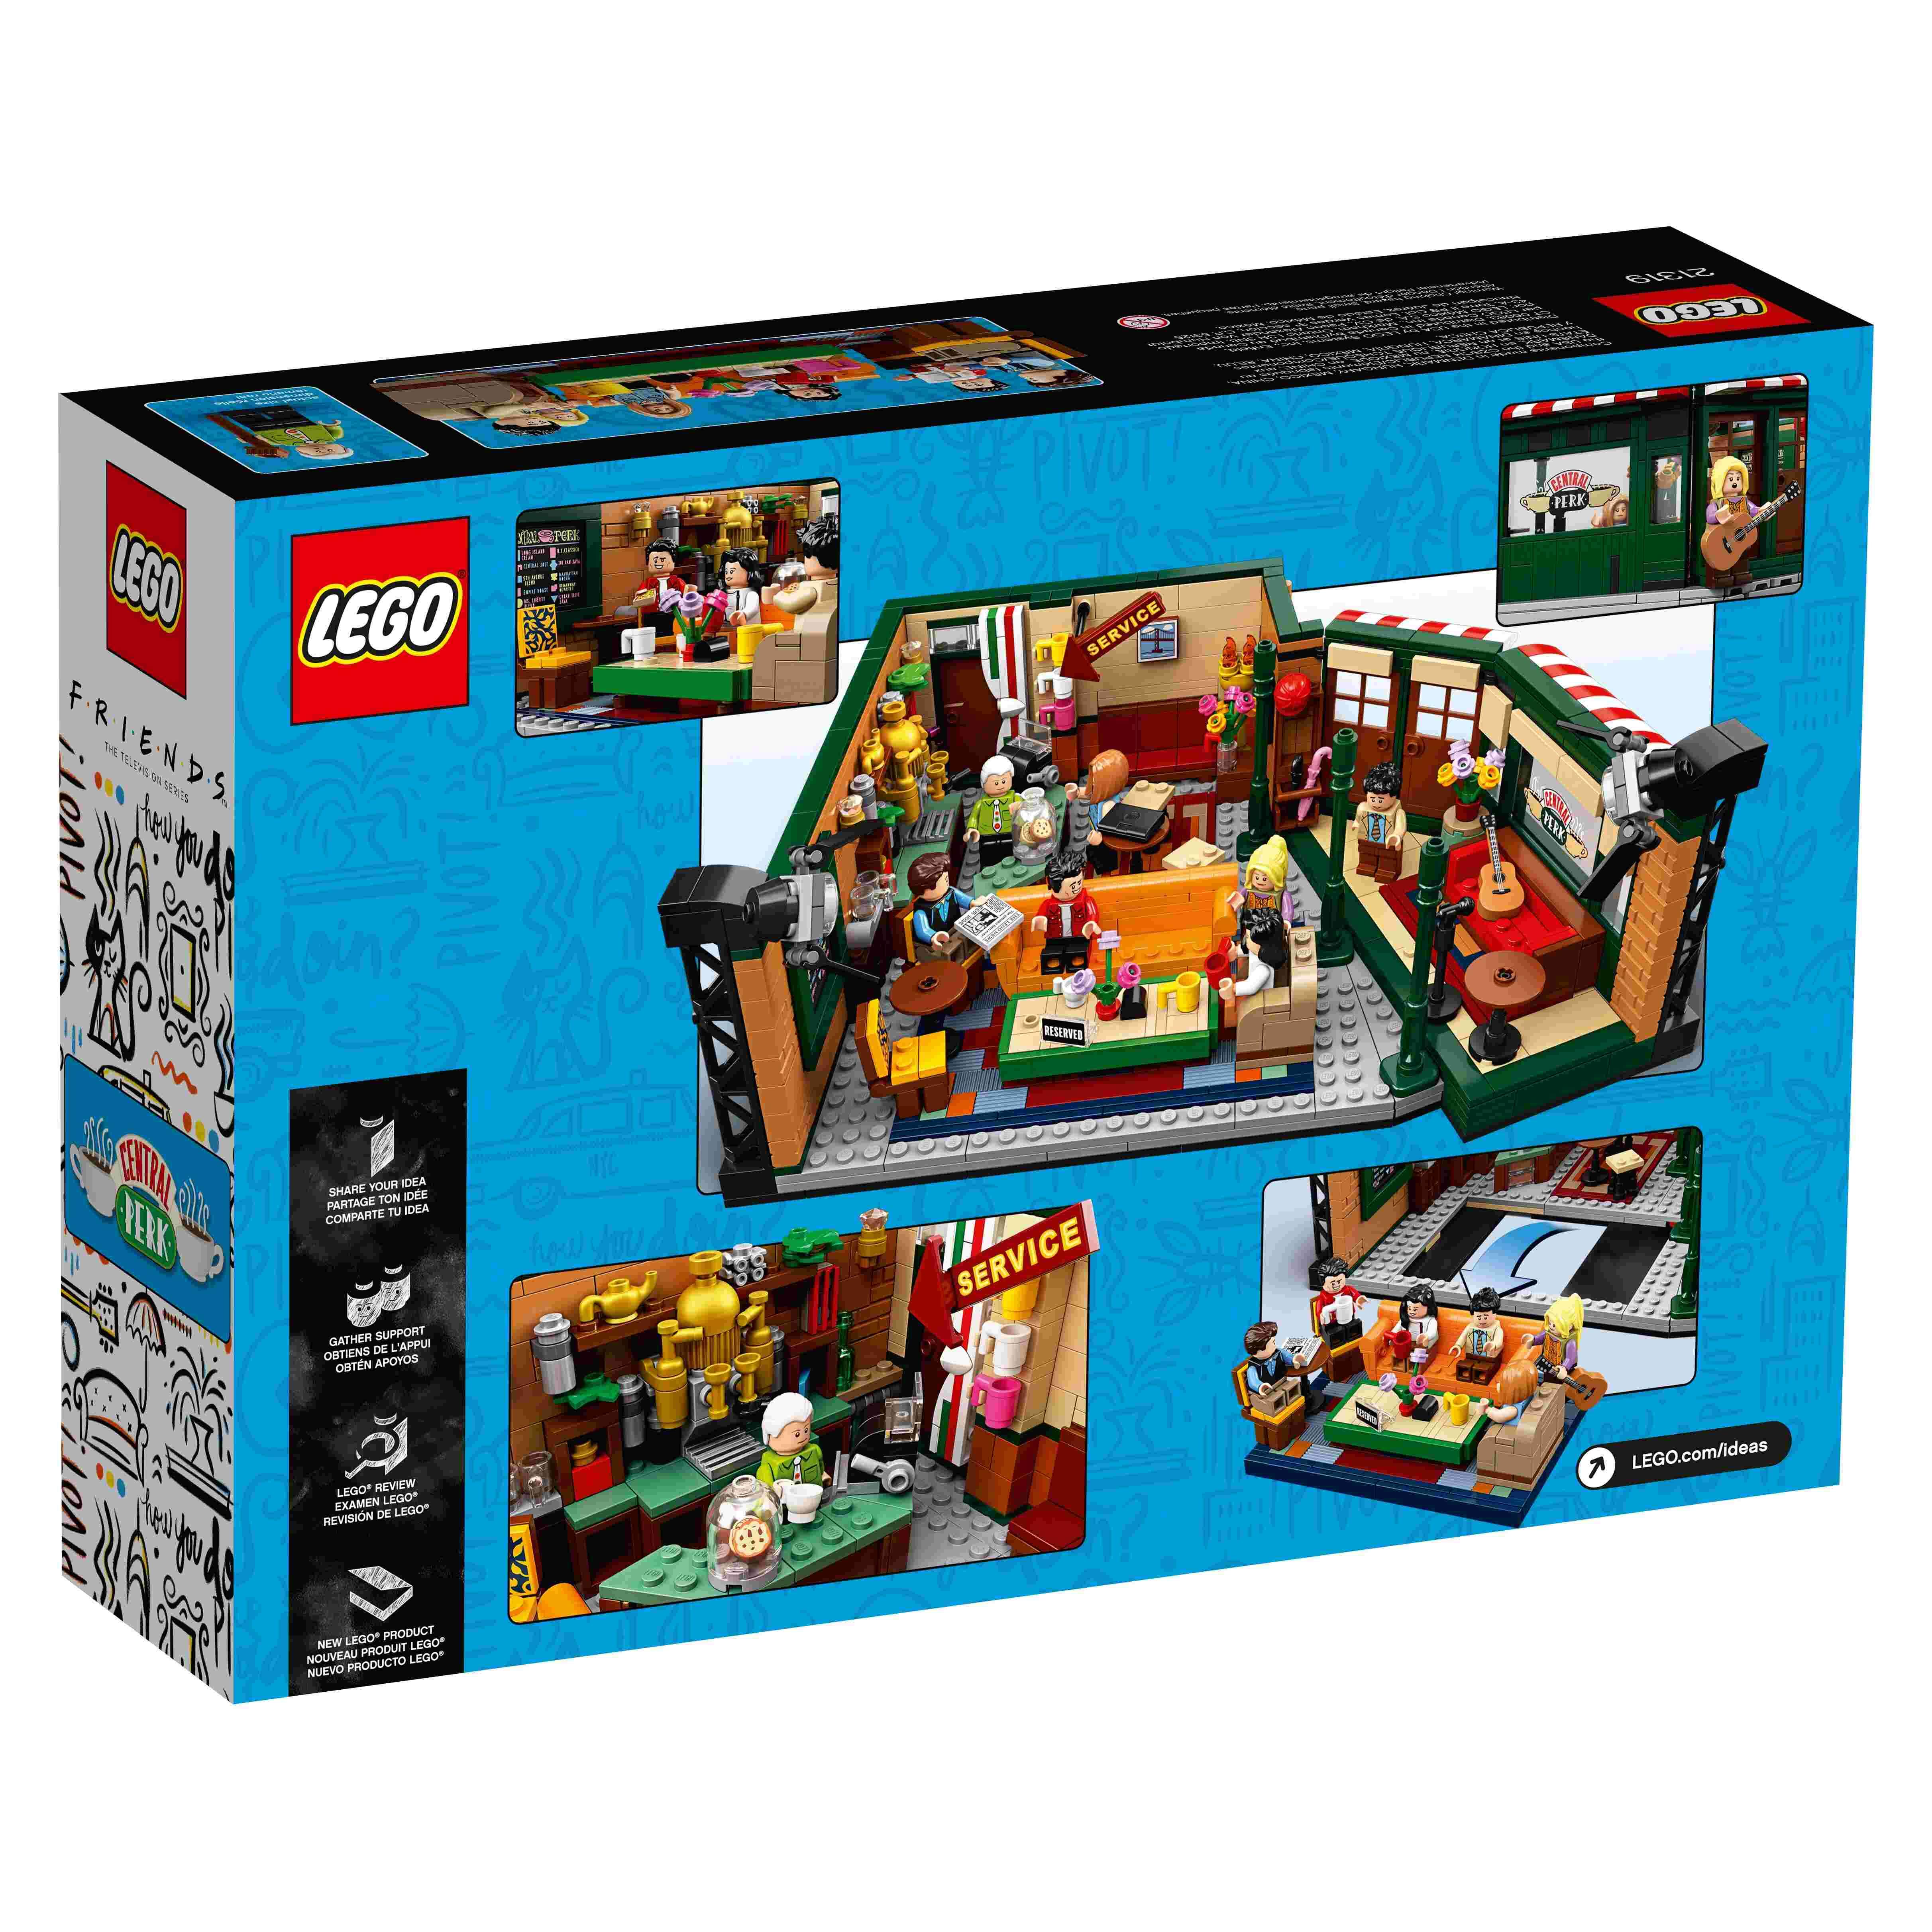 LEGO 21319 Ideas FRIENDS Central Perk, Café mit 7 Minifiguren